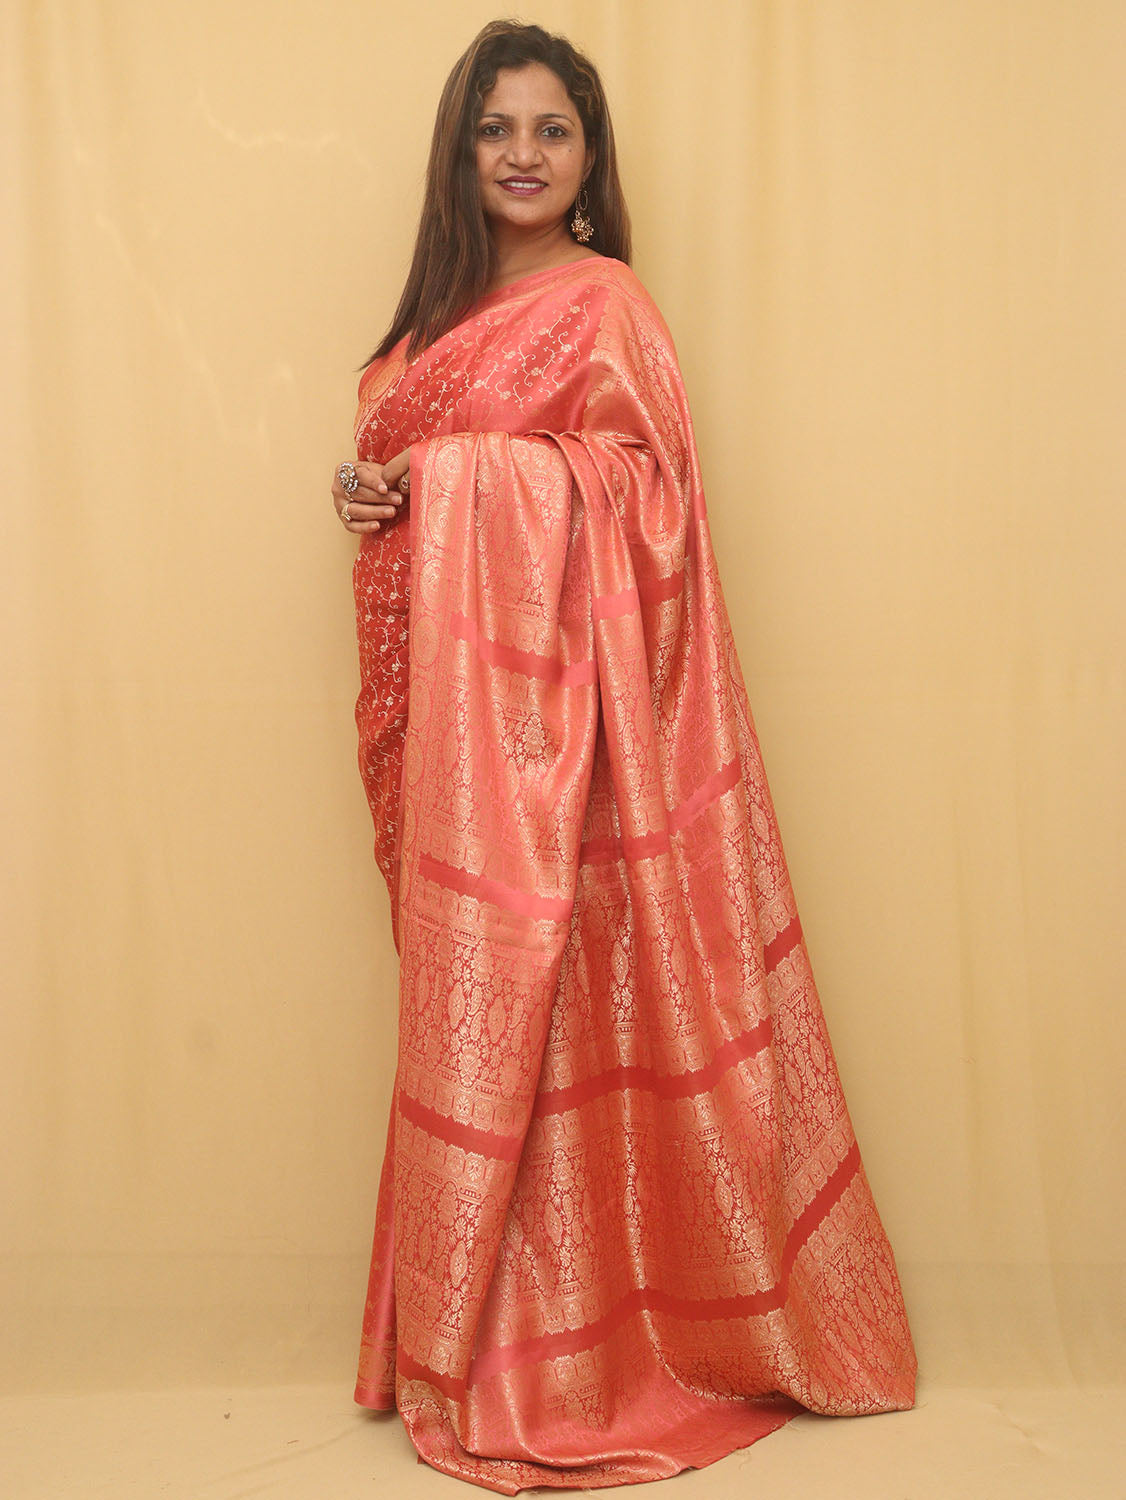 Shop Now for Red Handloom Banarasi Satin Silk Saree - Latest Collection - Luxurion World